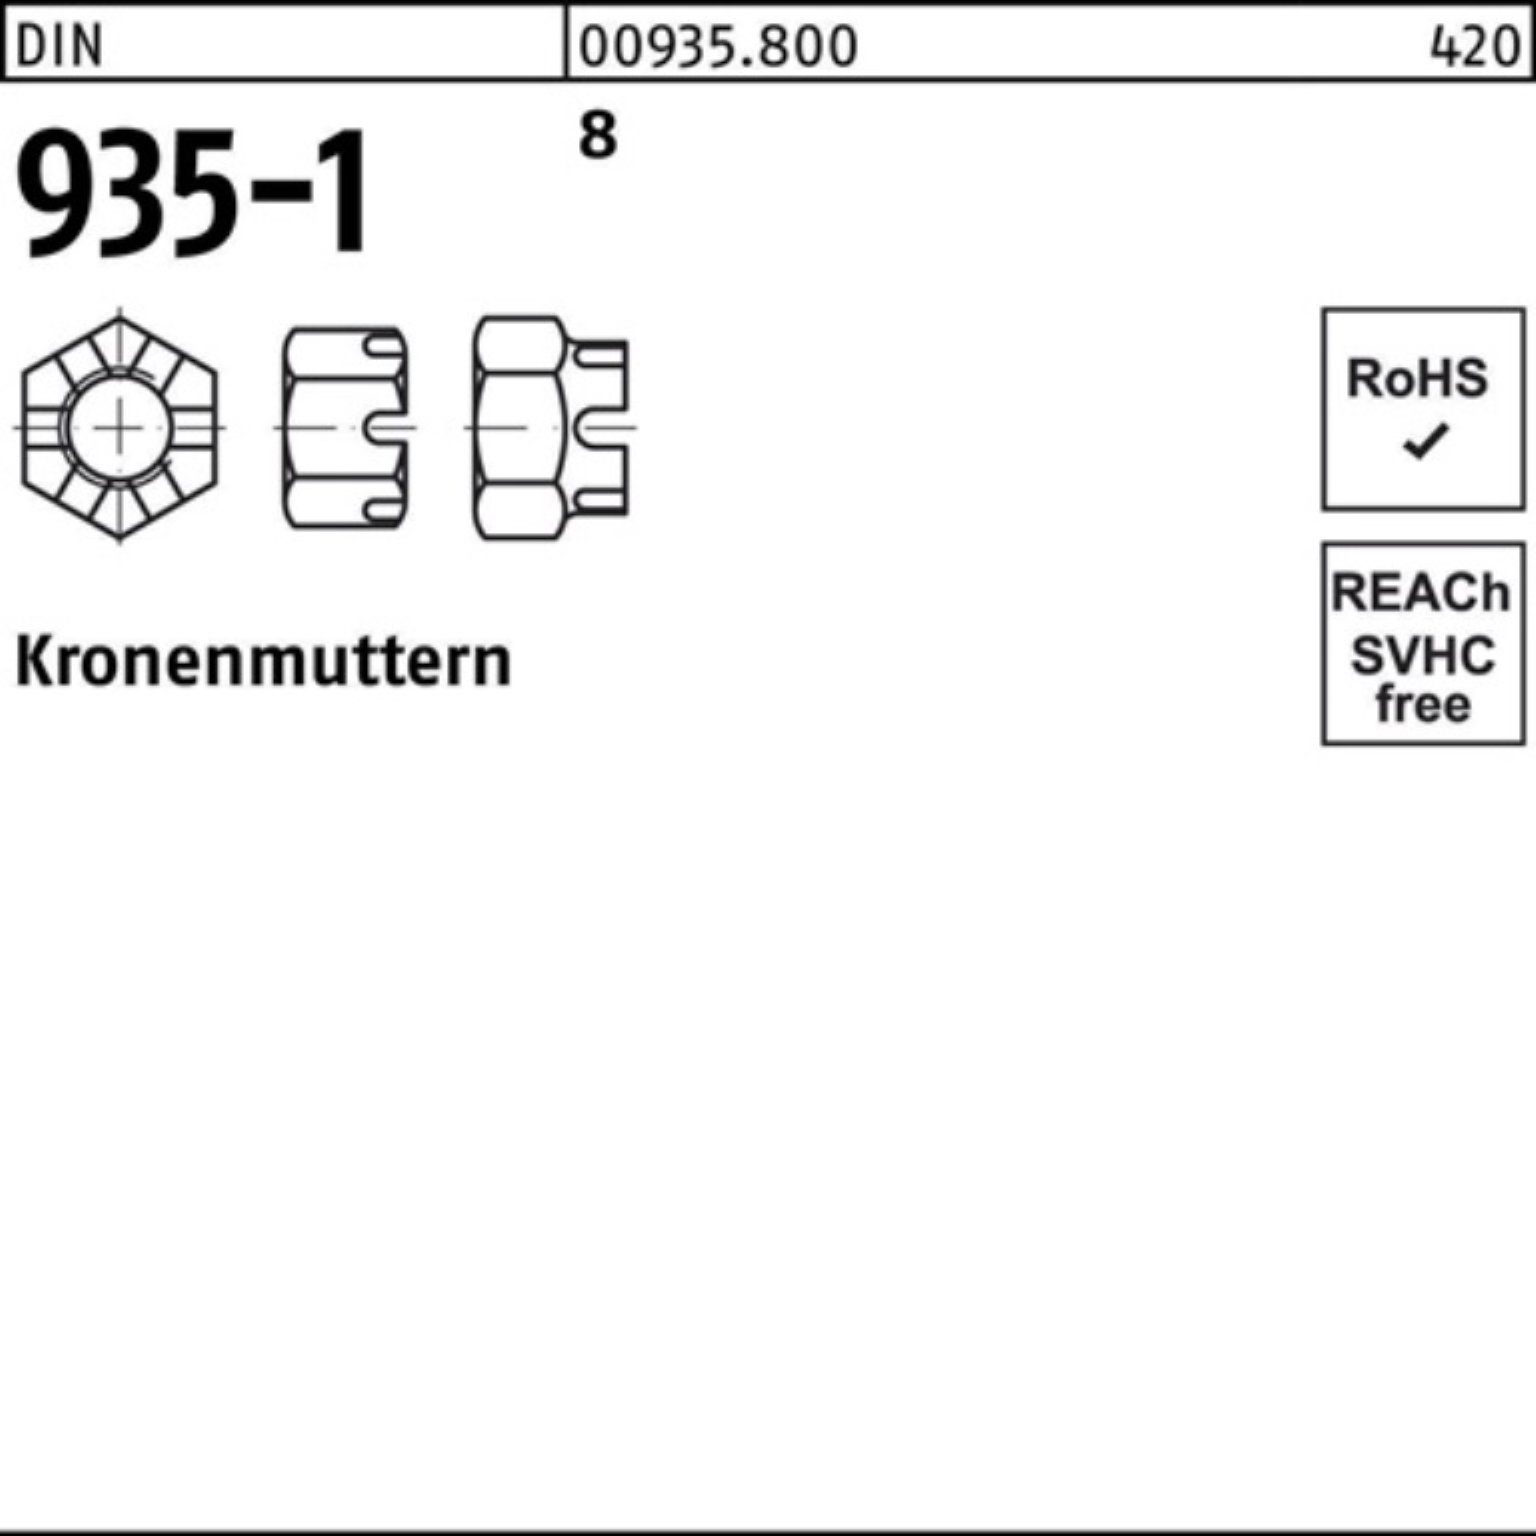 M30 8 Reyher Kronenmutter 10 DIN 8 Stück DIN 935-1 935-1 100er Pack Kronenmu Kronenmutter